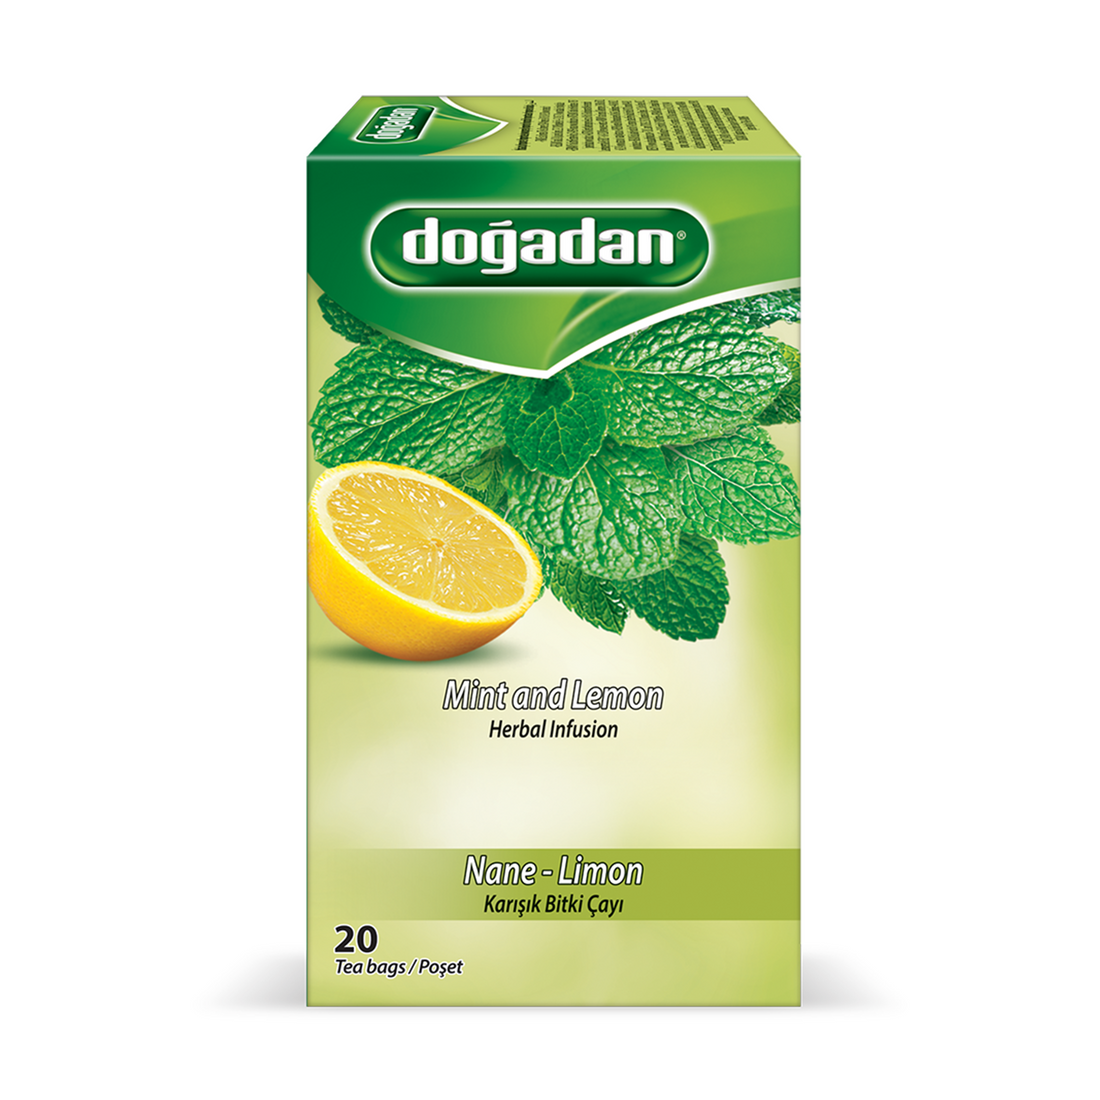 Dogadan Mint &amp; Lemon Herbal Infusion 2g×20P | Dogadan Nane-Limon Karisik Bitki Cayi | Mint snd Lemon Herbal Infusion